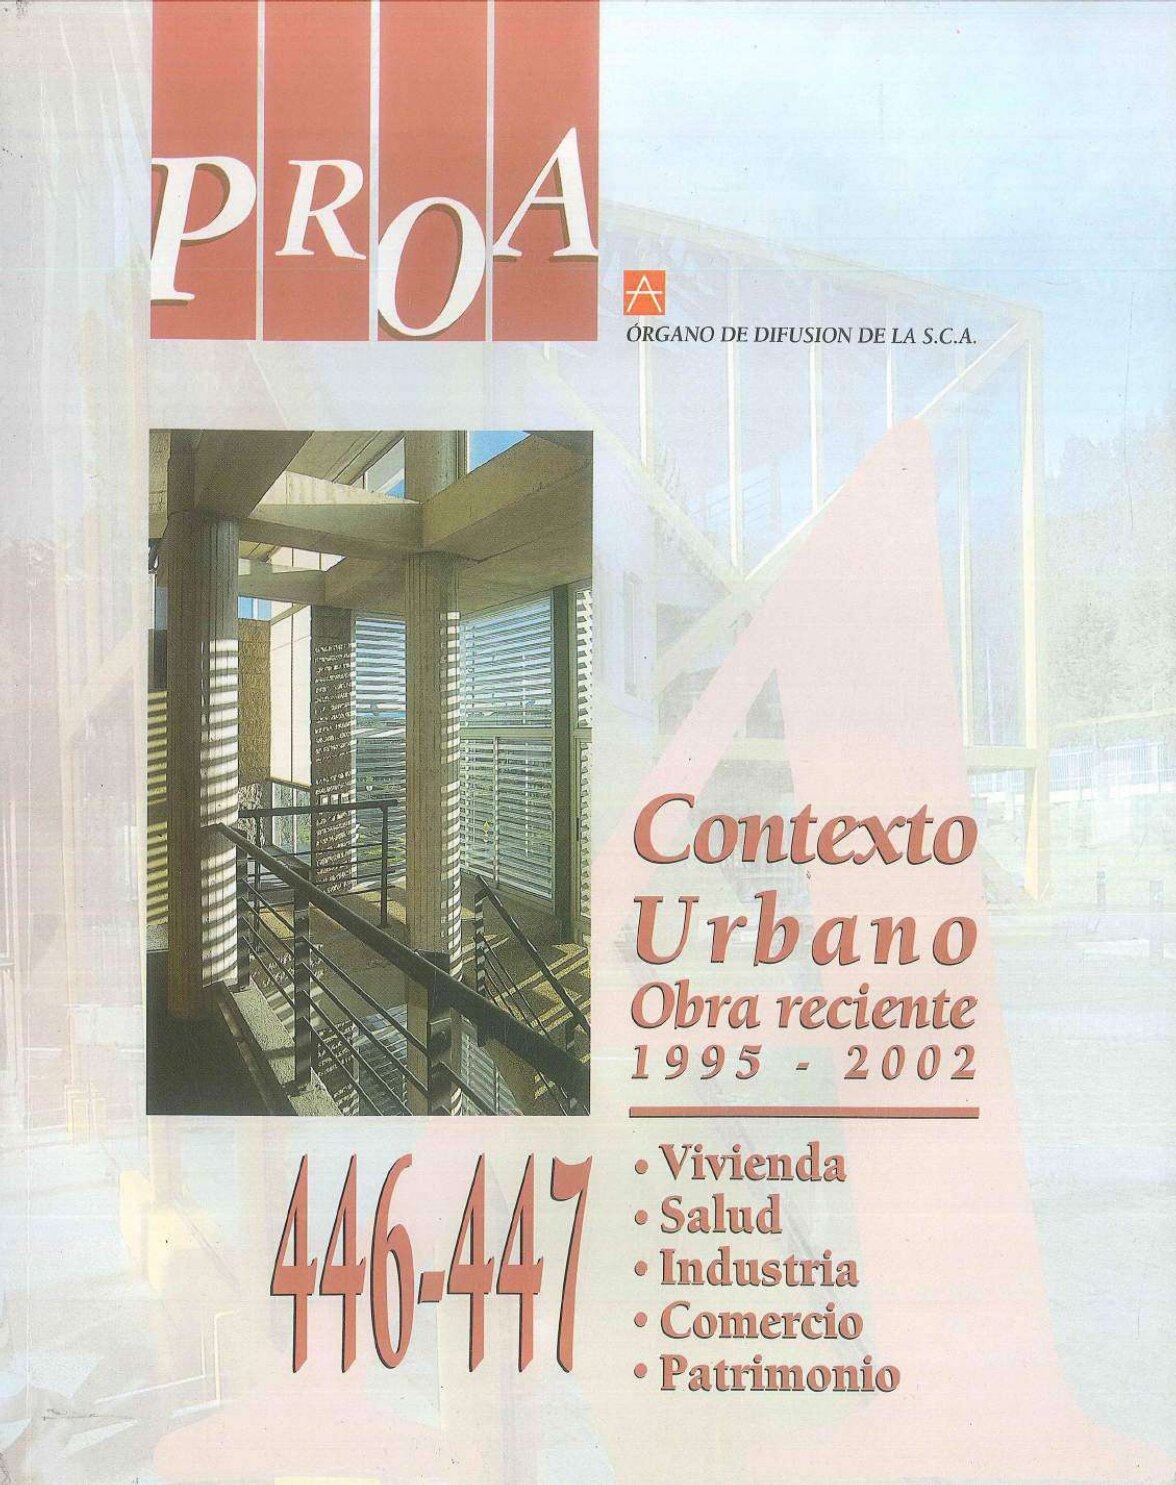 2002_Contexto Urbano- Obra reciente 1995-2002. REVISTA PROA 1_compressed (1)_page-0001.jpg